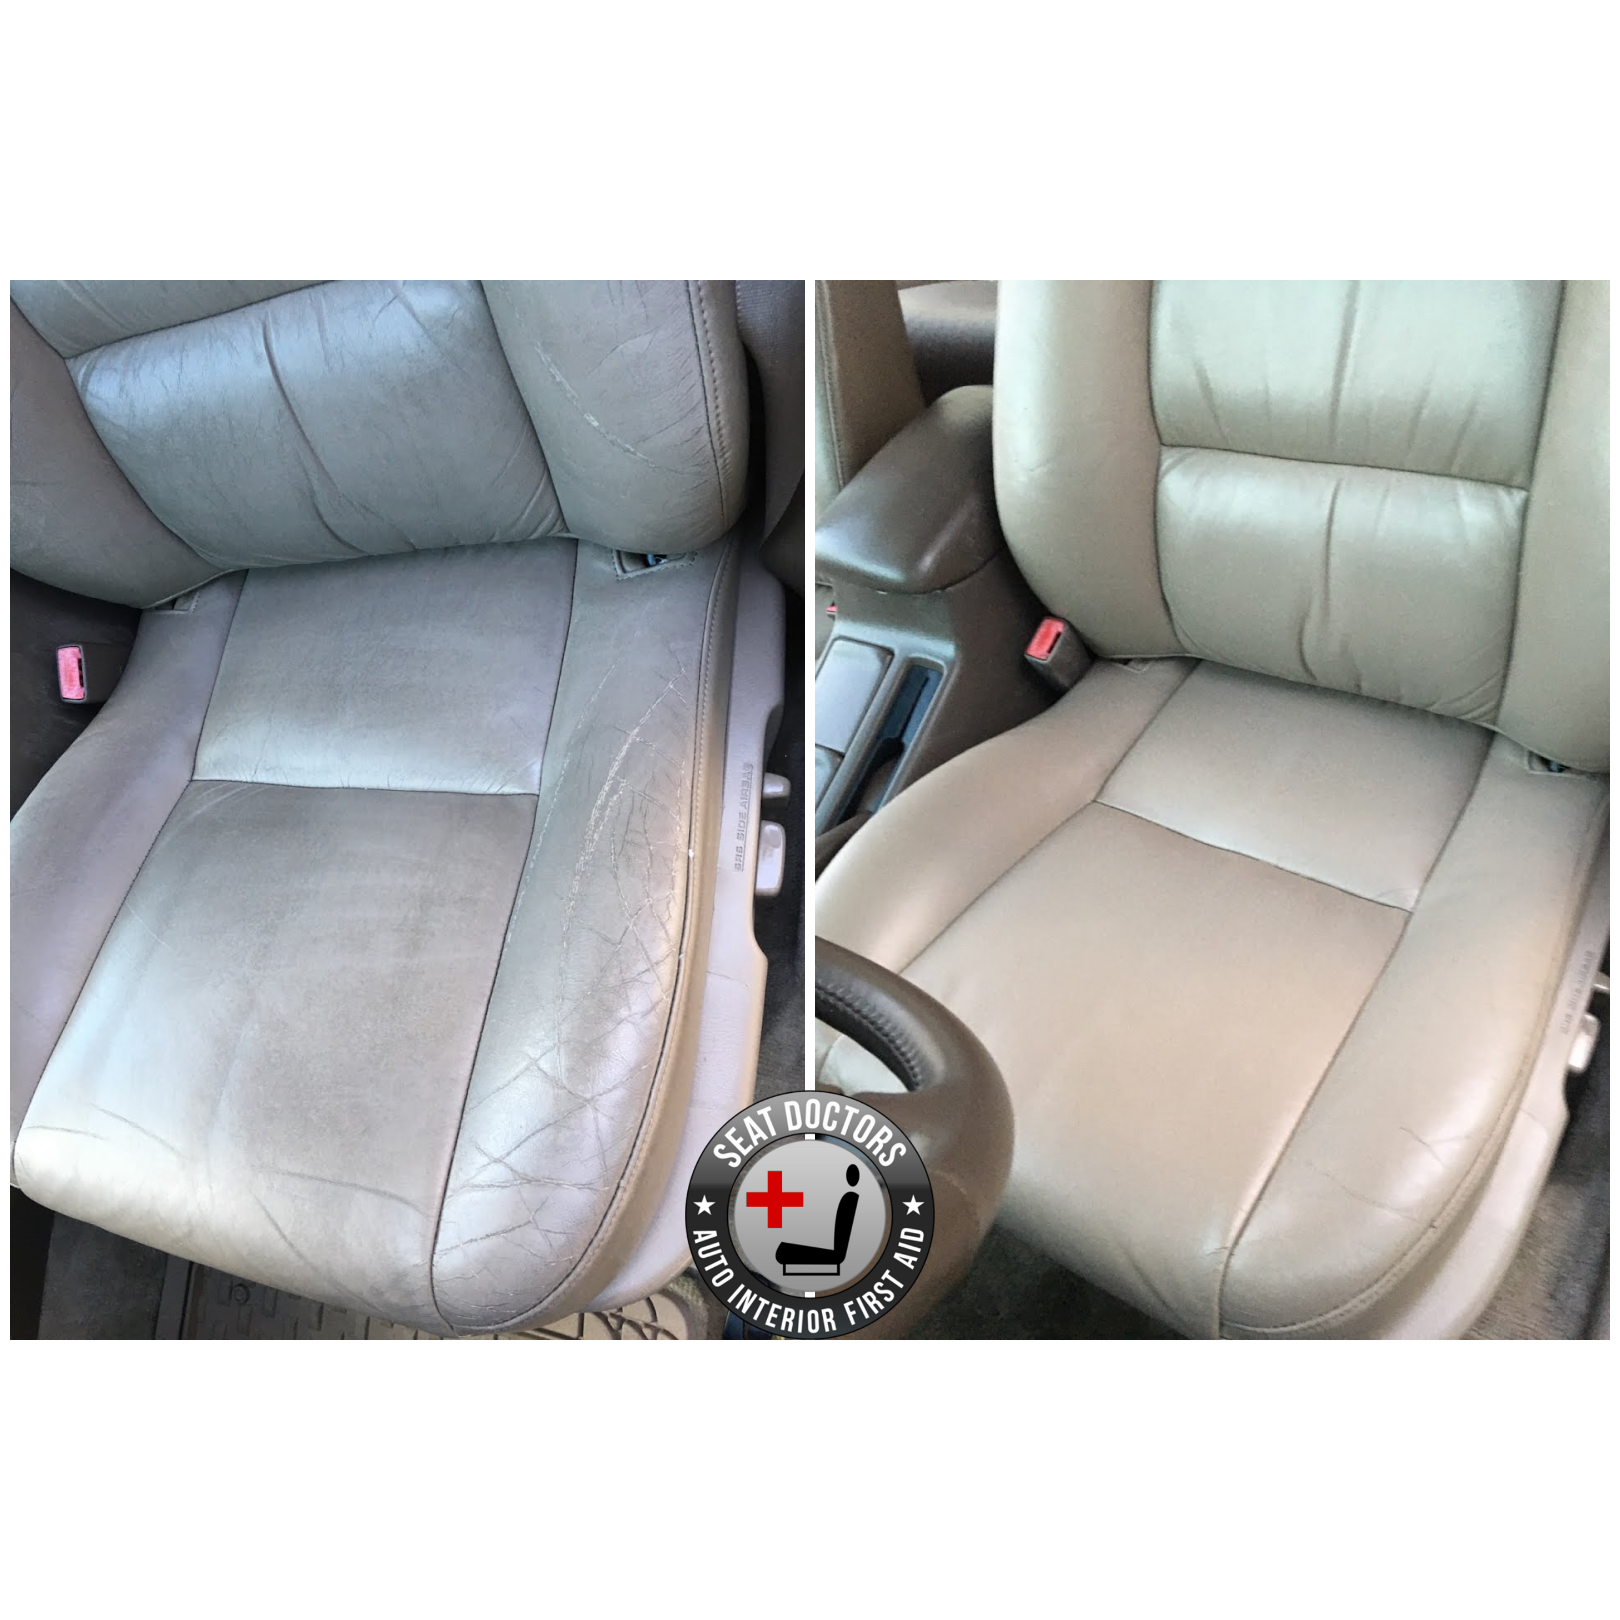 Black Leather Restorer for TOYOTA Avensis Prius Interior Seats Colour Dye Repair 